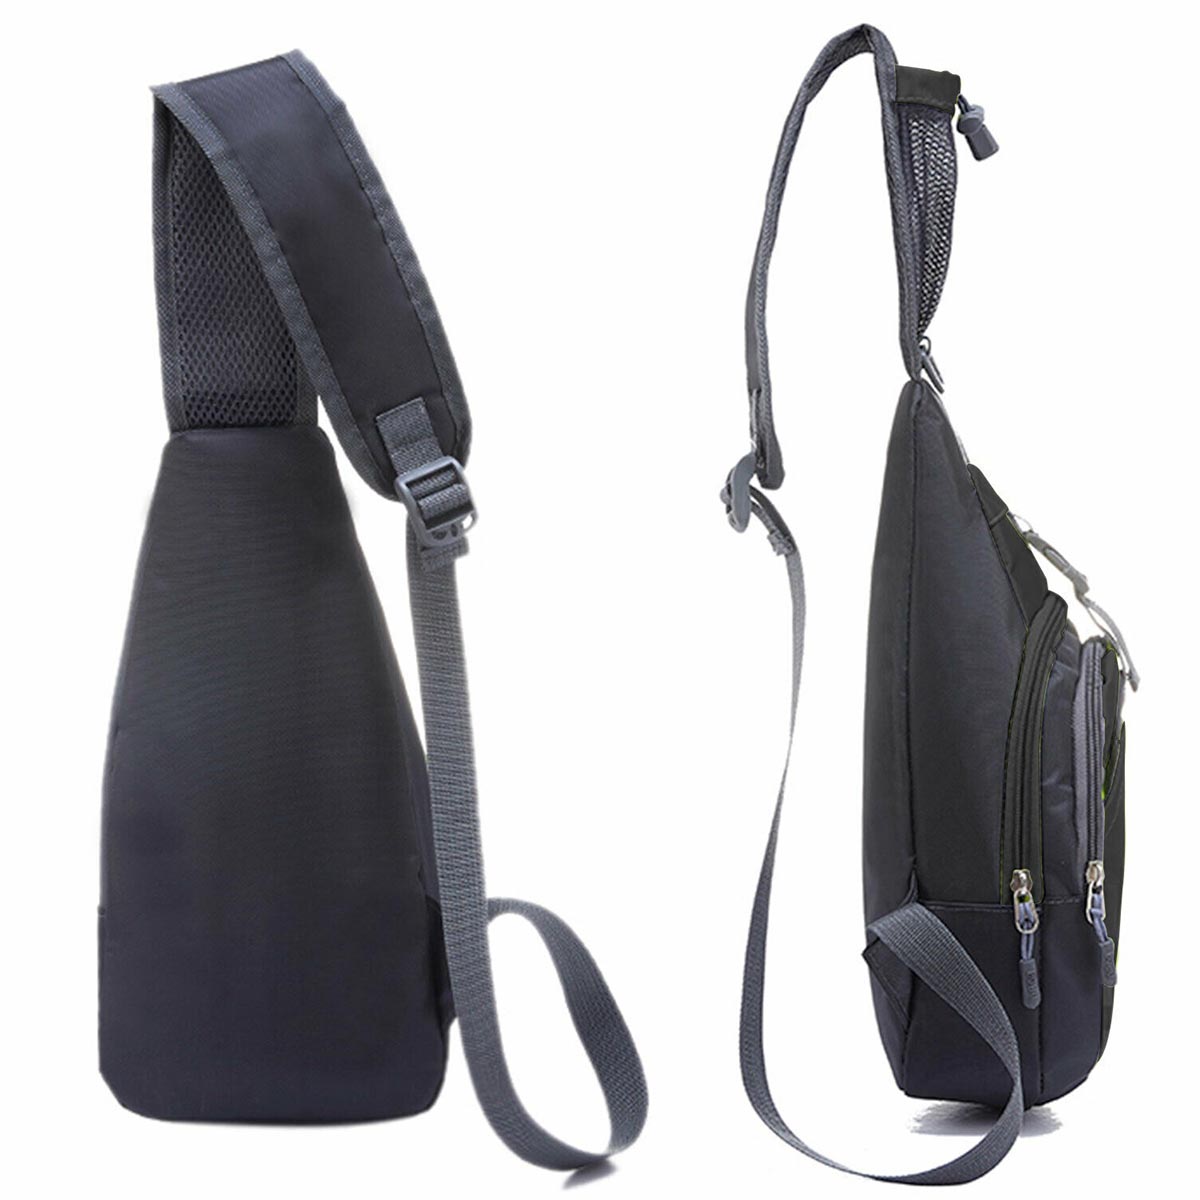 Sports-Shoulder-Game-Bag-Travel-Hiking-Waist-Backpack-Carrying-Crossbody-Handbag-for-Nintendo-Switch-1627798-5